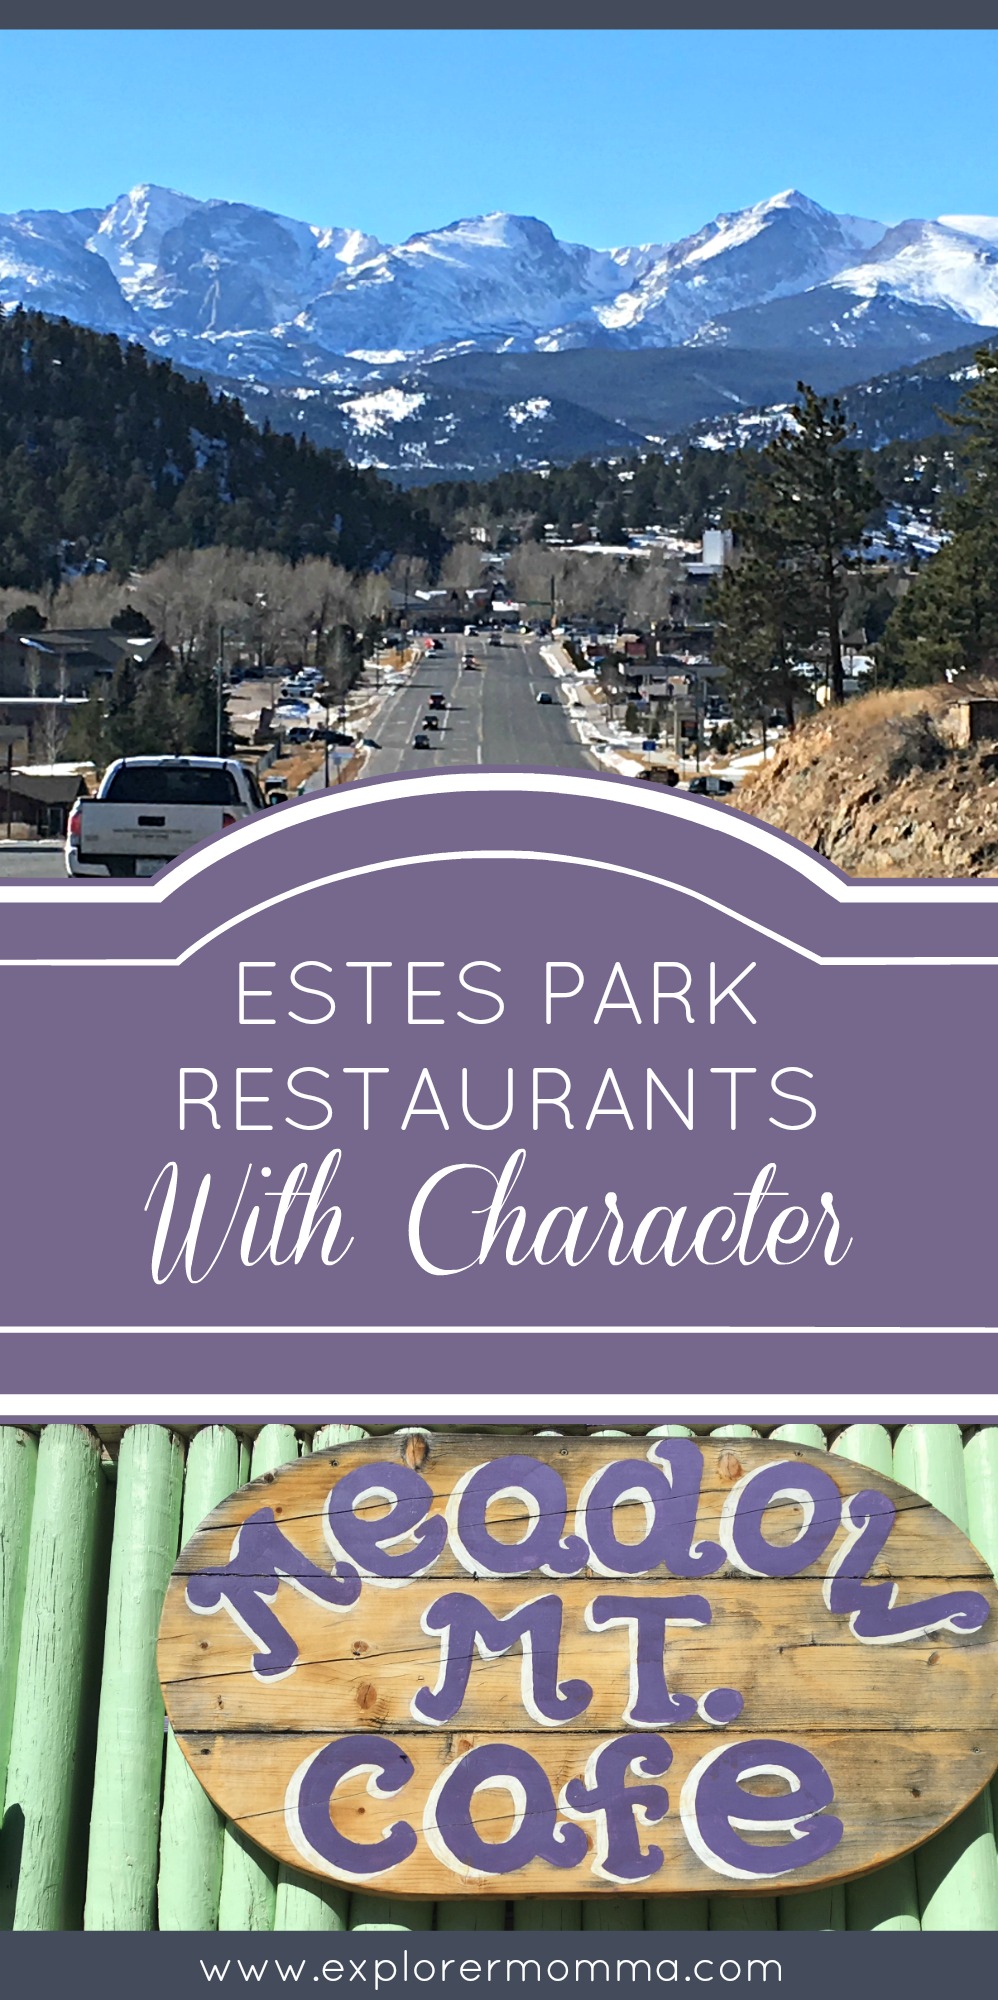 Estes Park Restaurants With Character - Explorer Momma